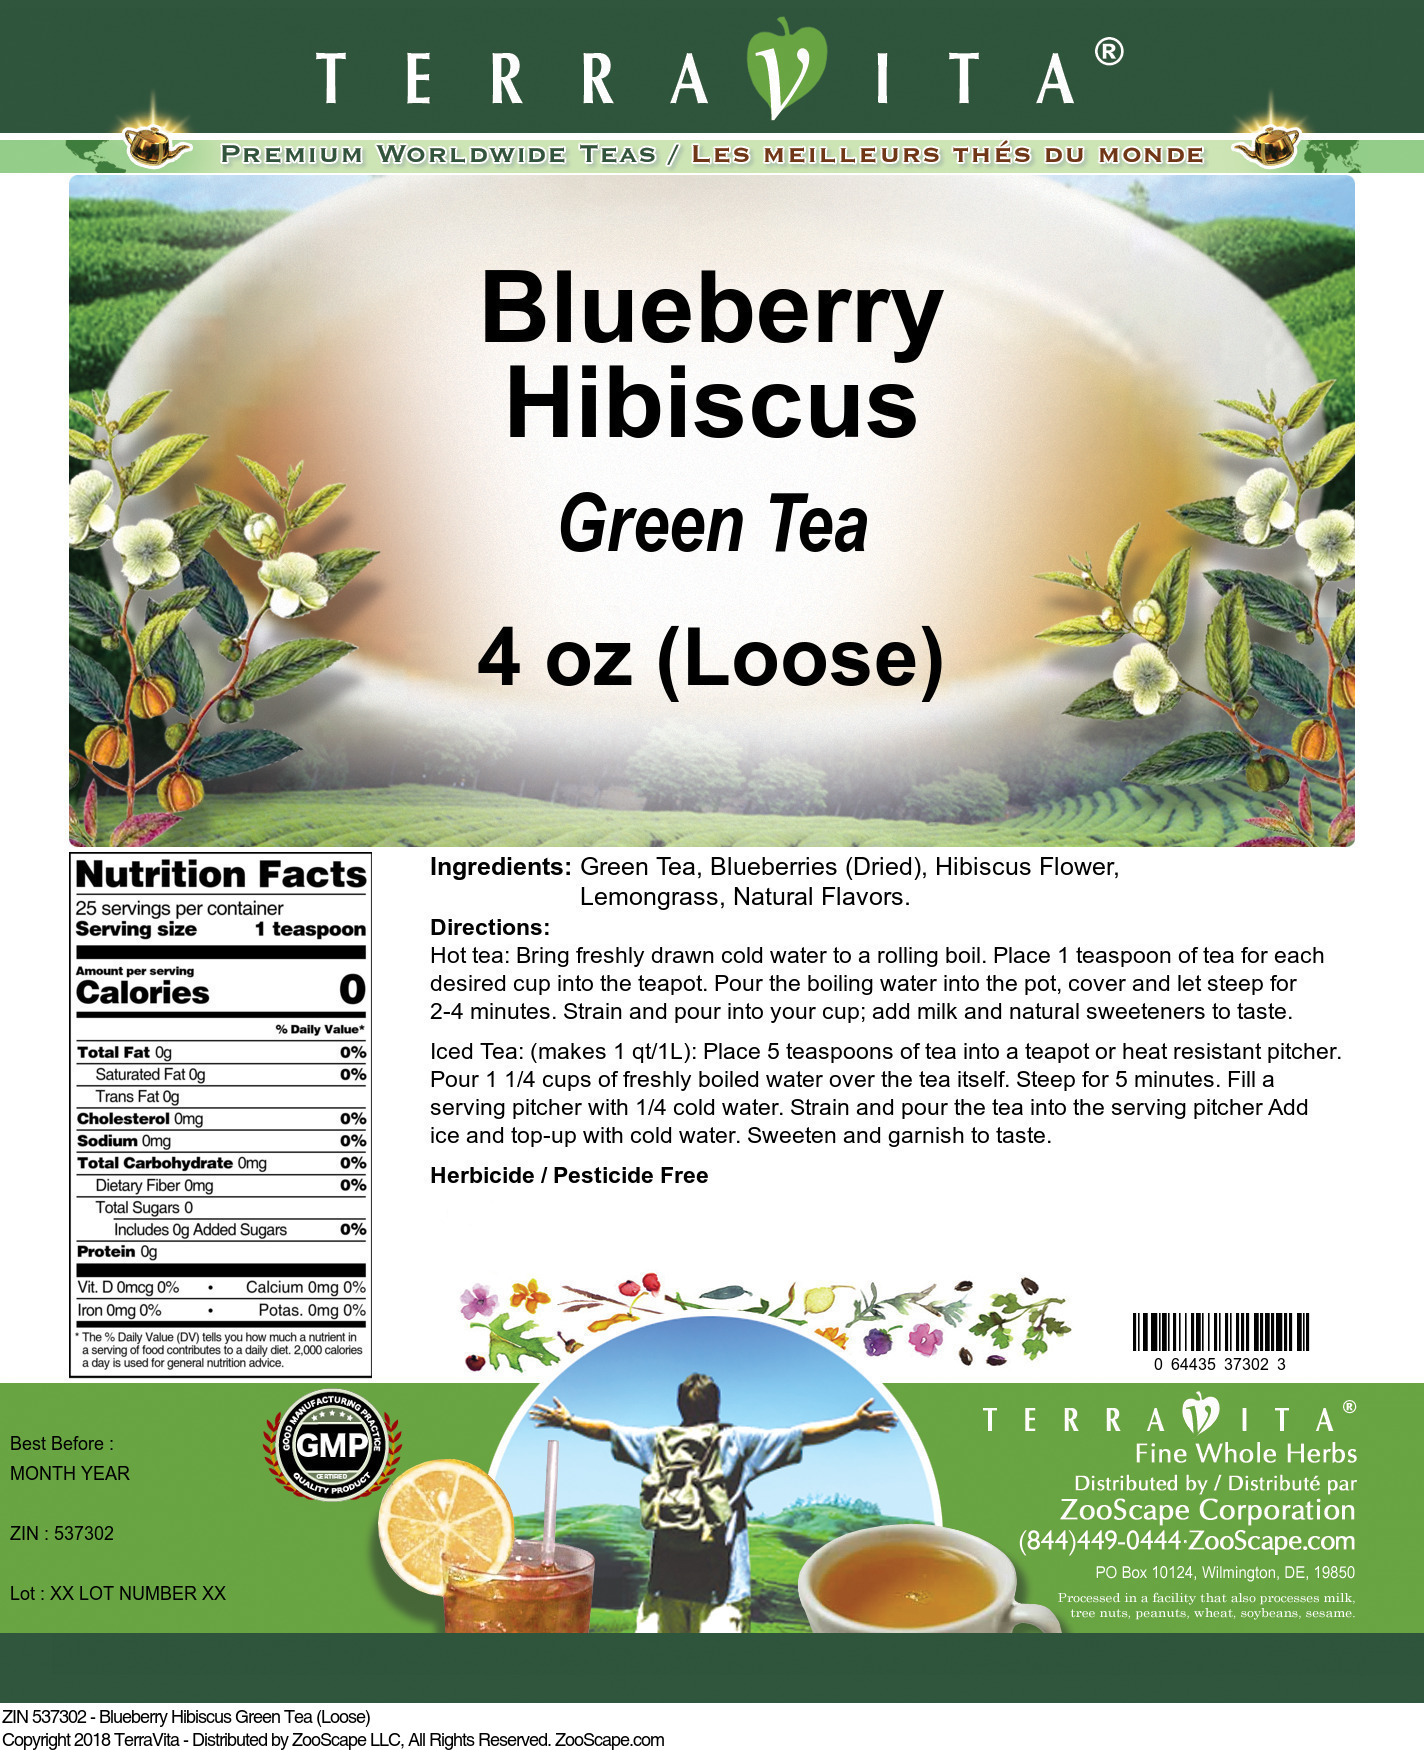 Blueberry Hibiscus Green Tea (Loose) - Label